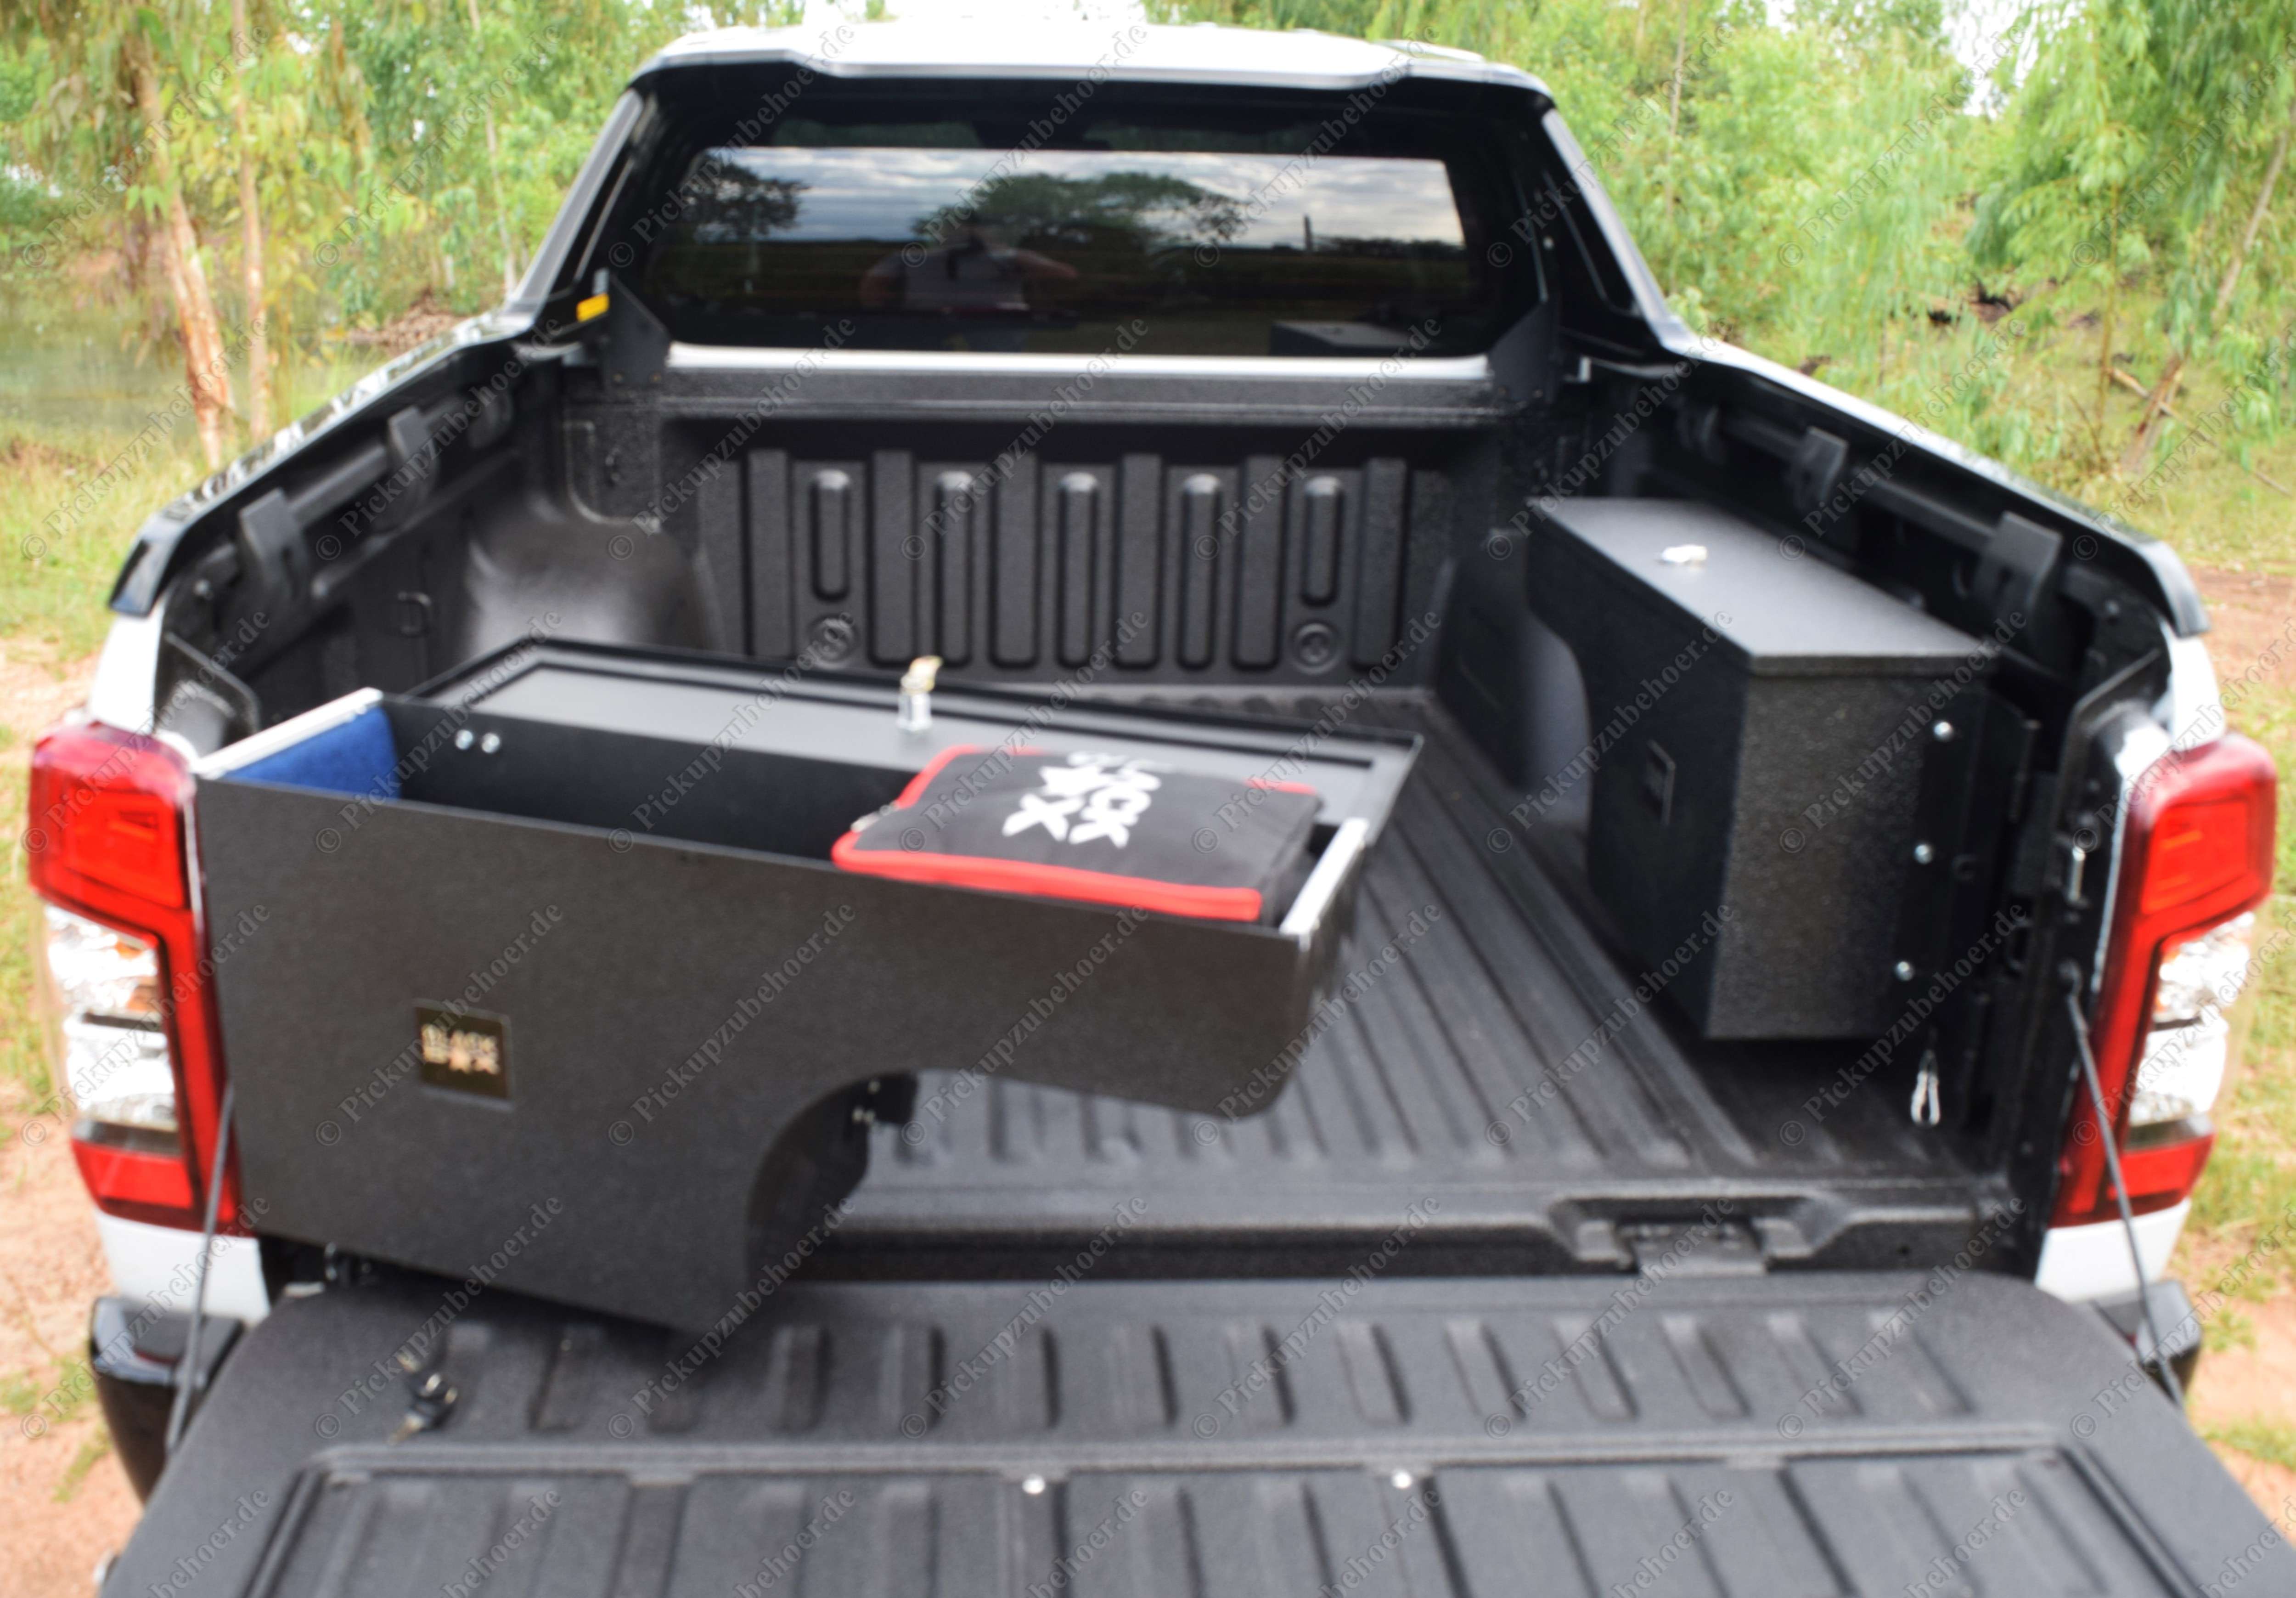 BLACKBOX schwenkbare Alu Staubox für Mitsubishi L200 / Fiat Fullback Pickups -3